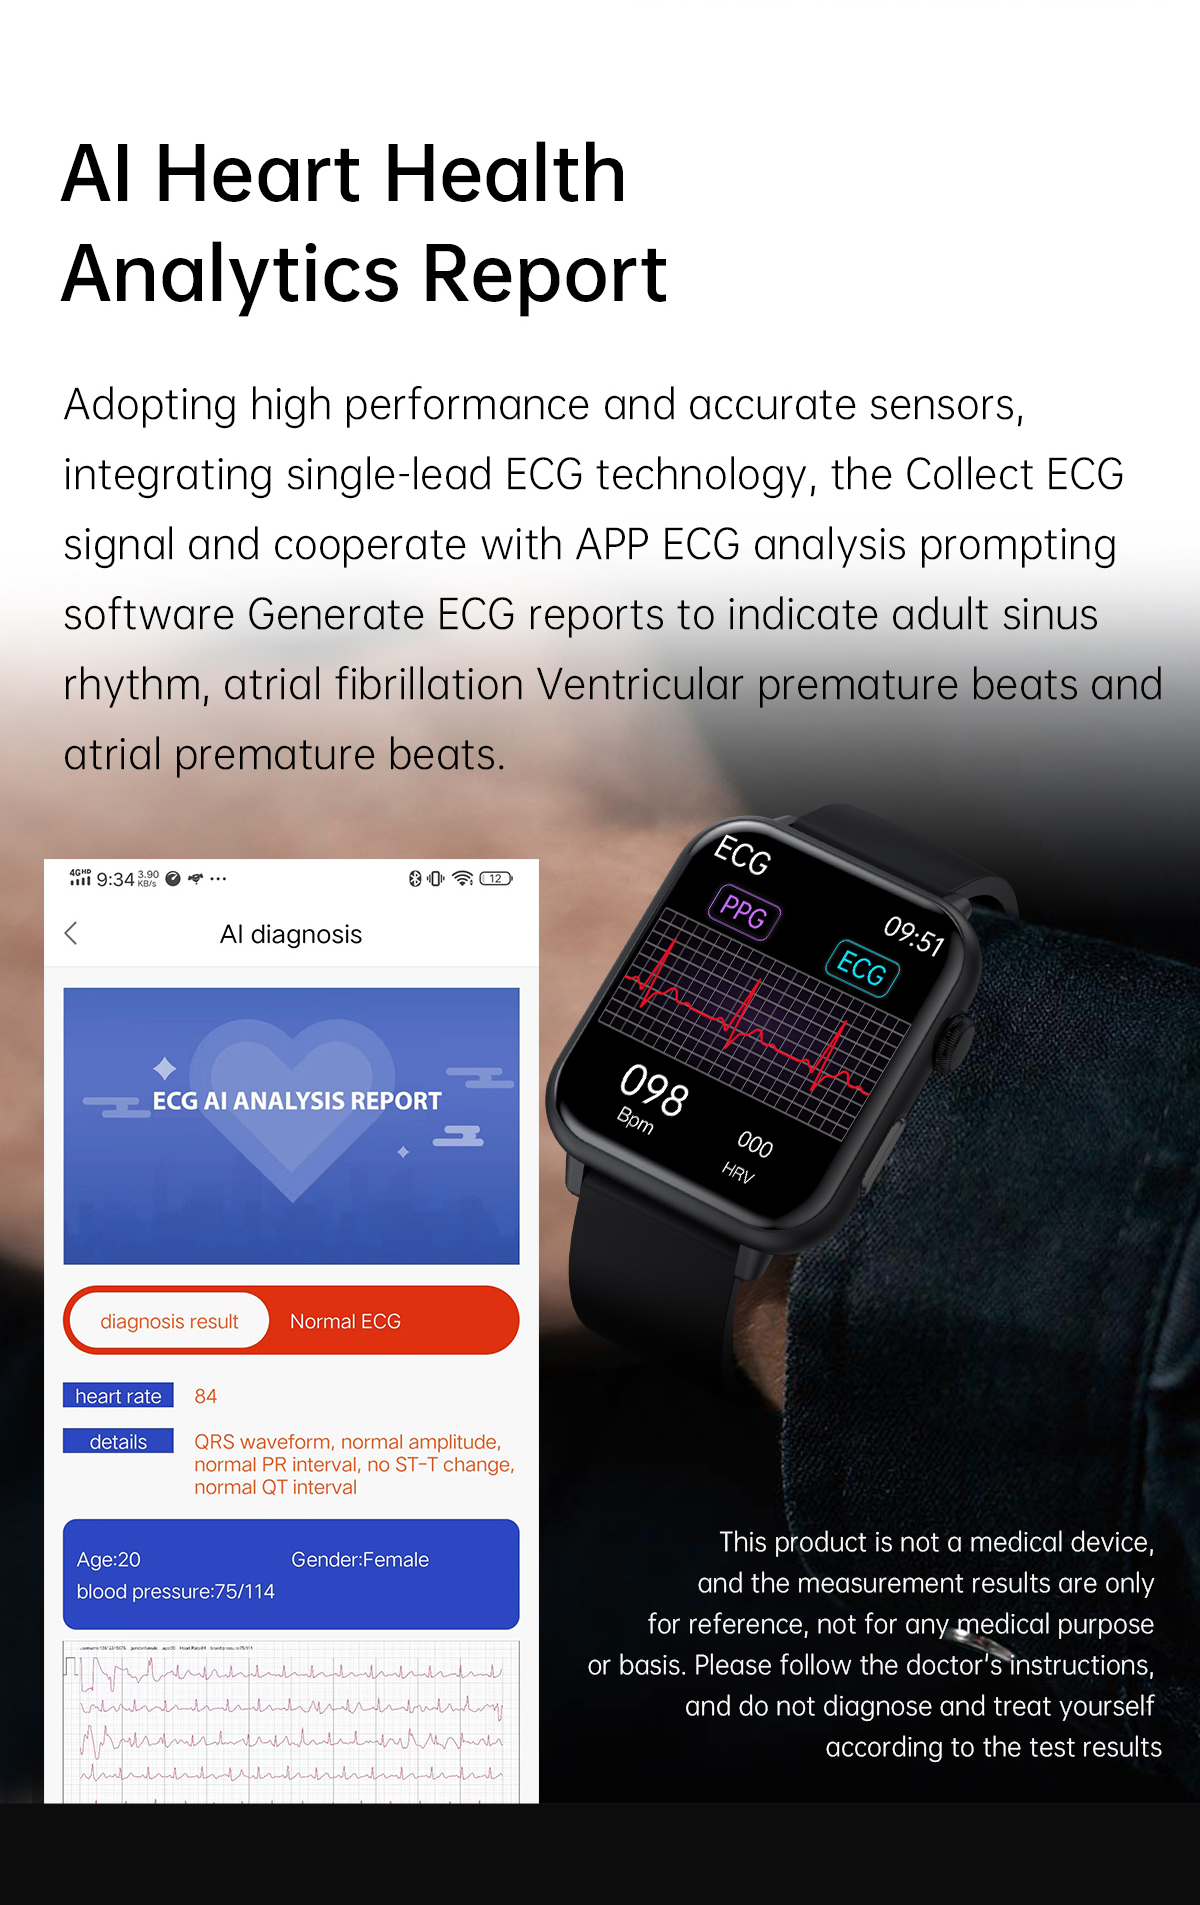 E200 Medical Blood Glucose ECG Health Smart Watch